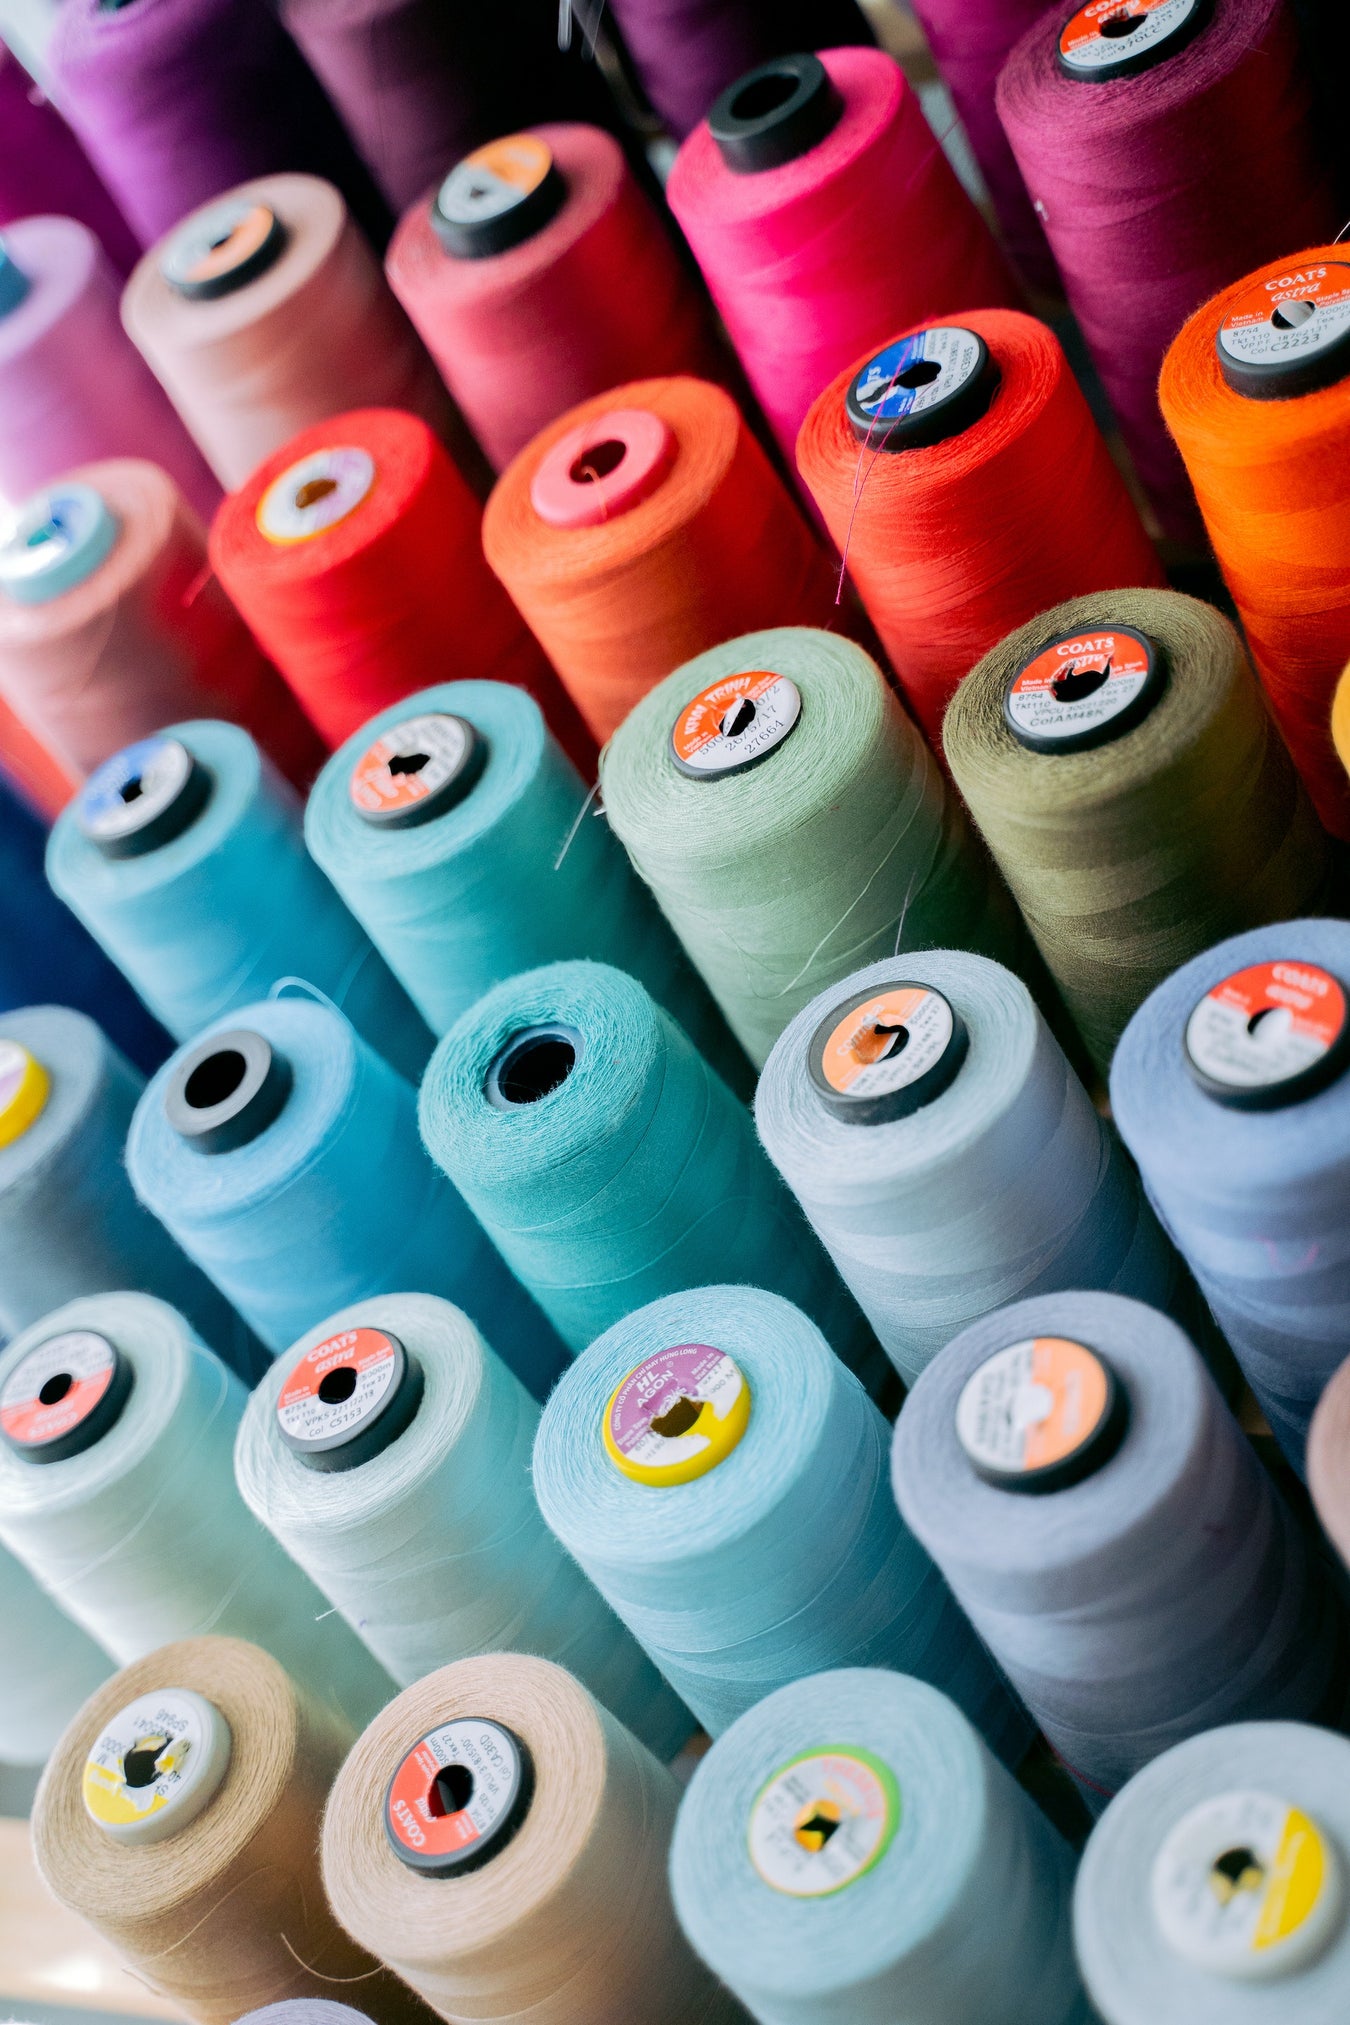 pexels-anna-tarazevich-6358817 - Simthread - High Quality Machine Embroidery Thread Supplier